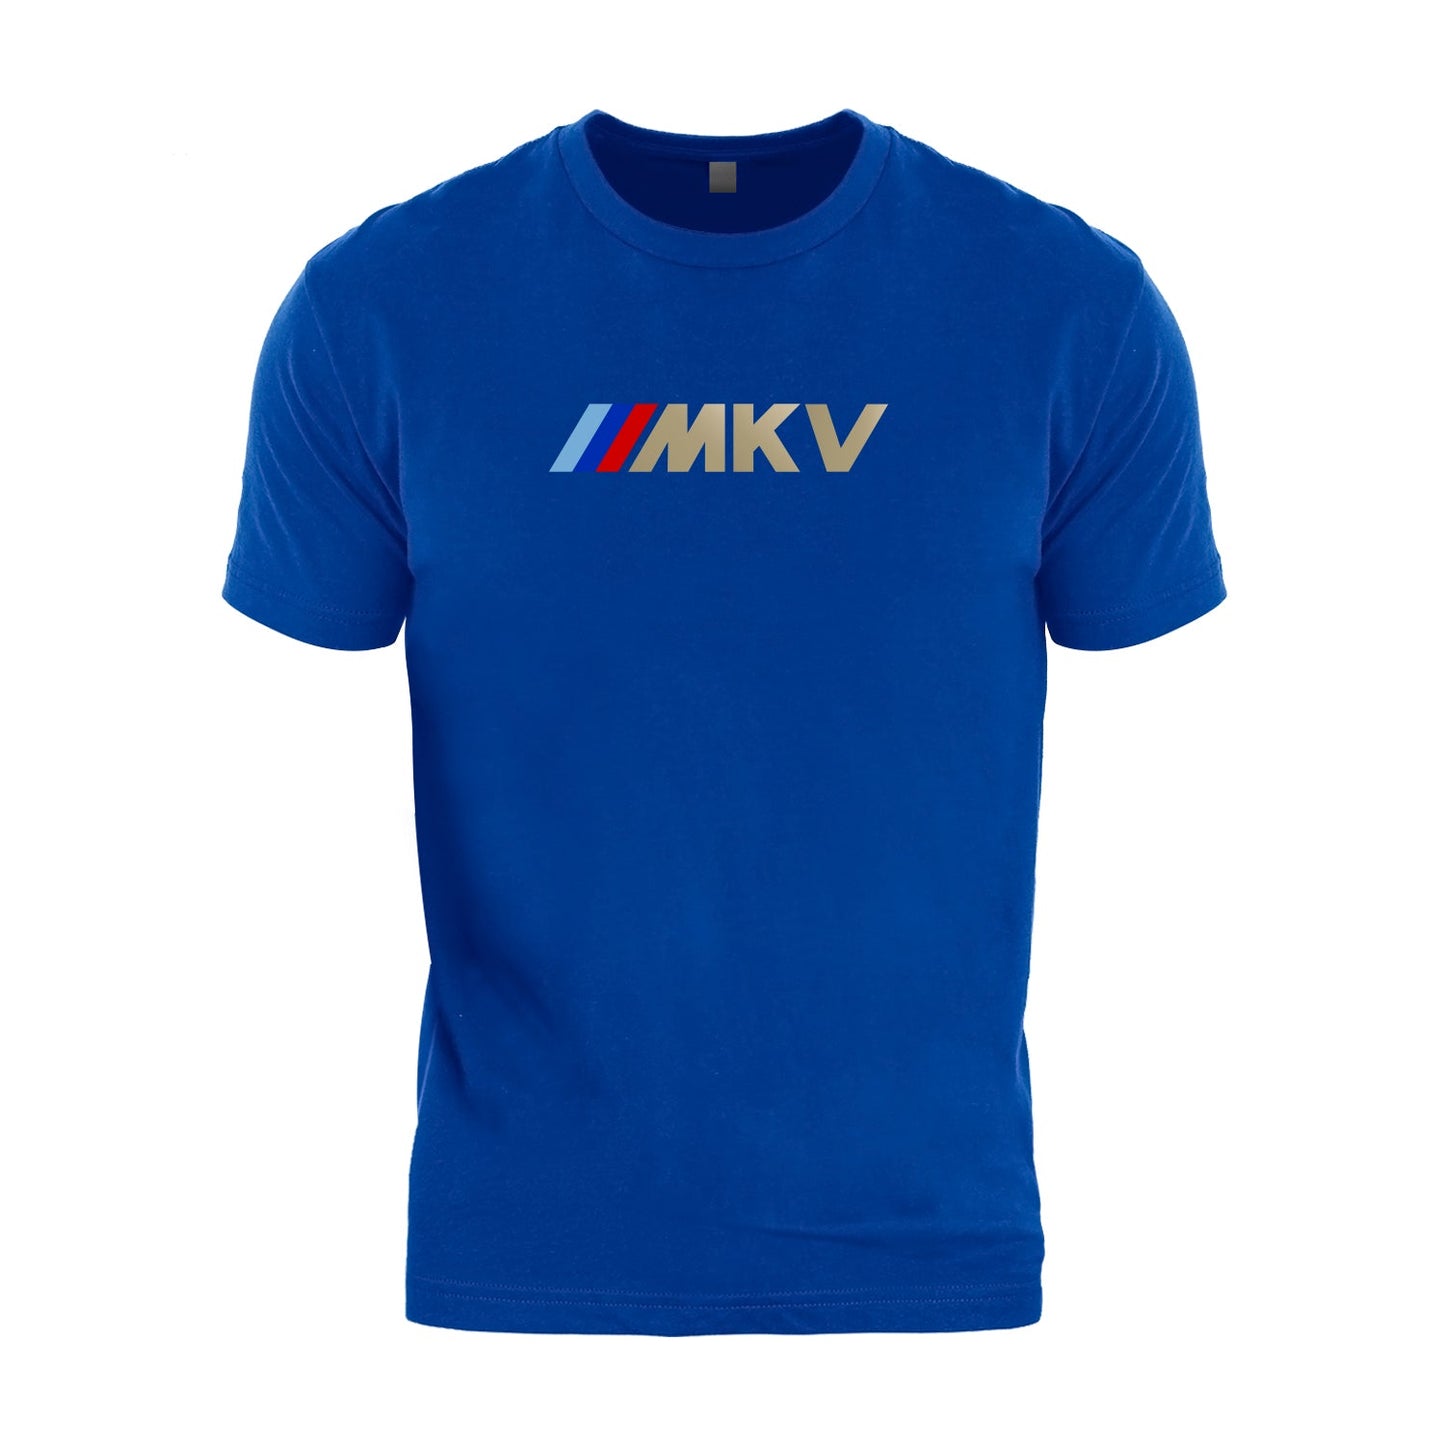 MKV Supra GR BMW Stripes Inspired T-Shirt